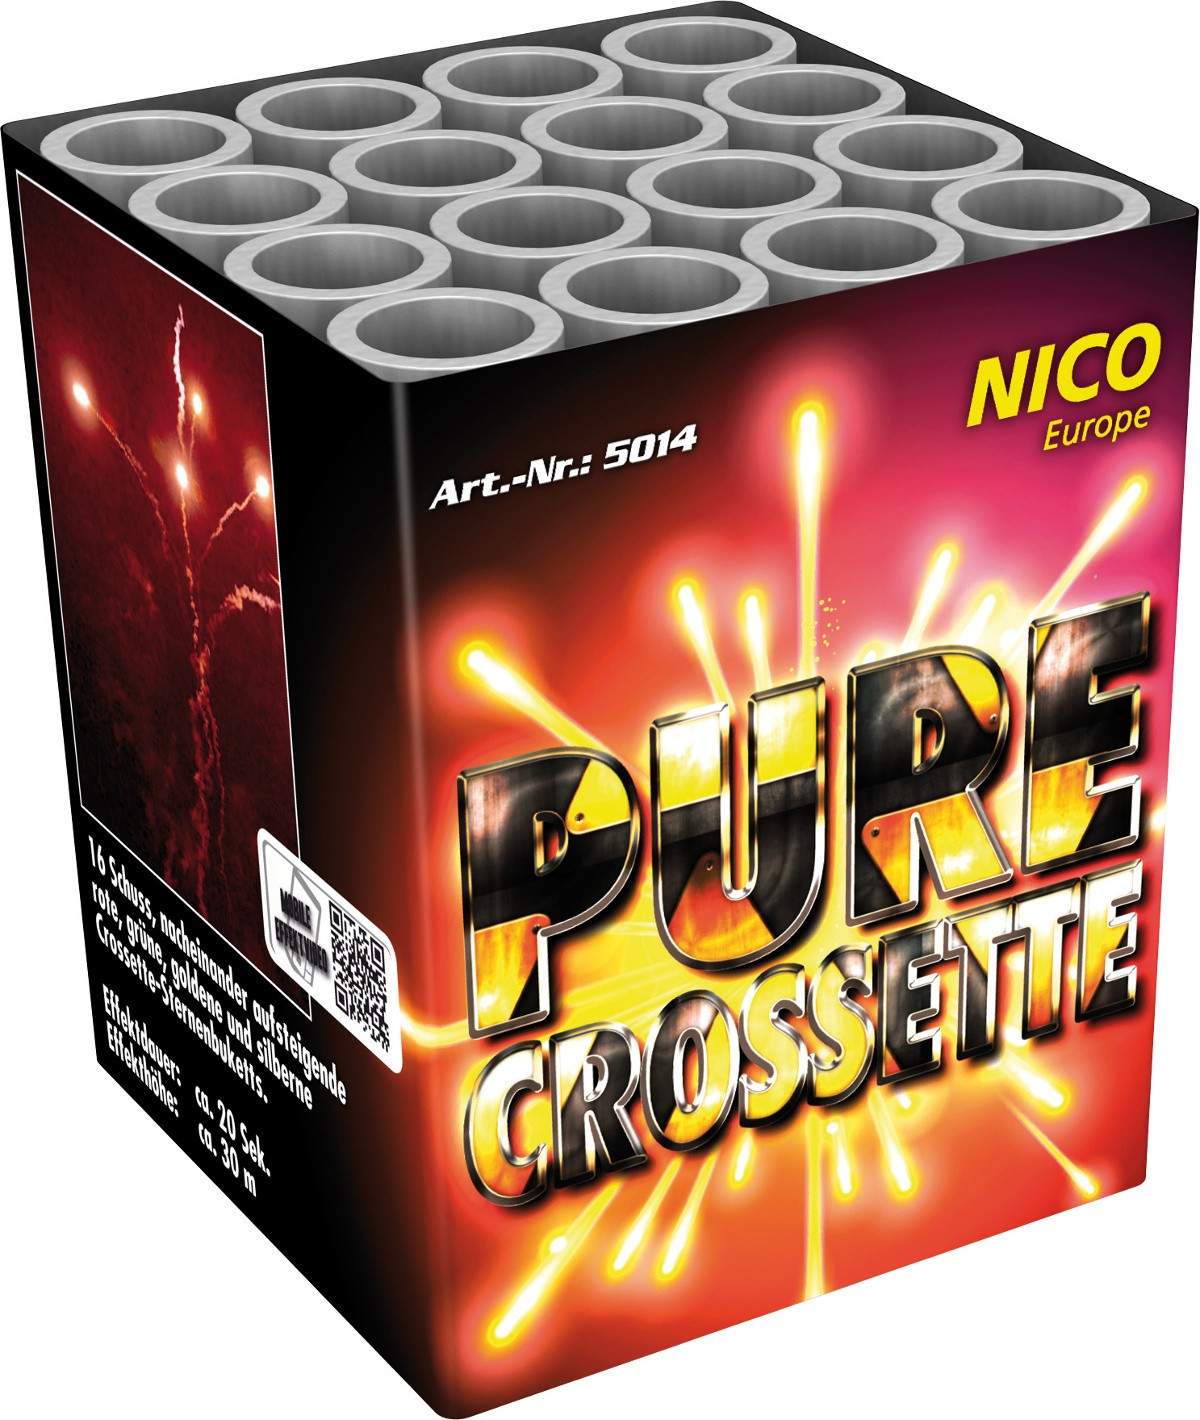 Feuerwerksrohrbatterie Pure Crosette